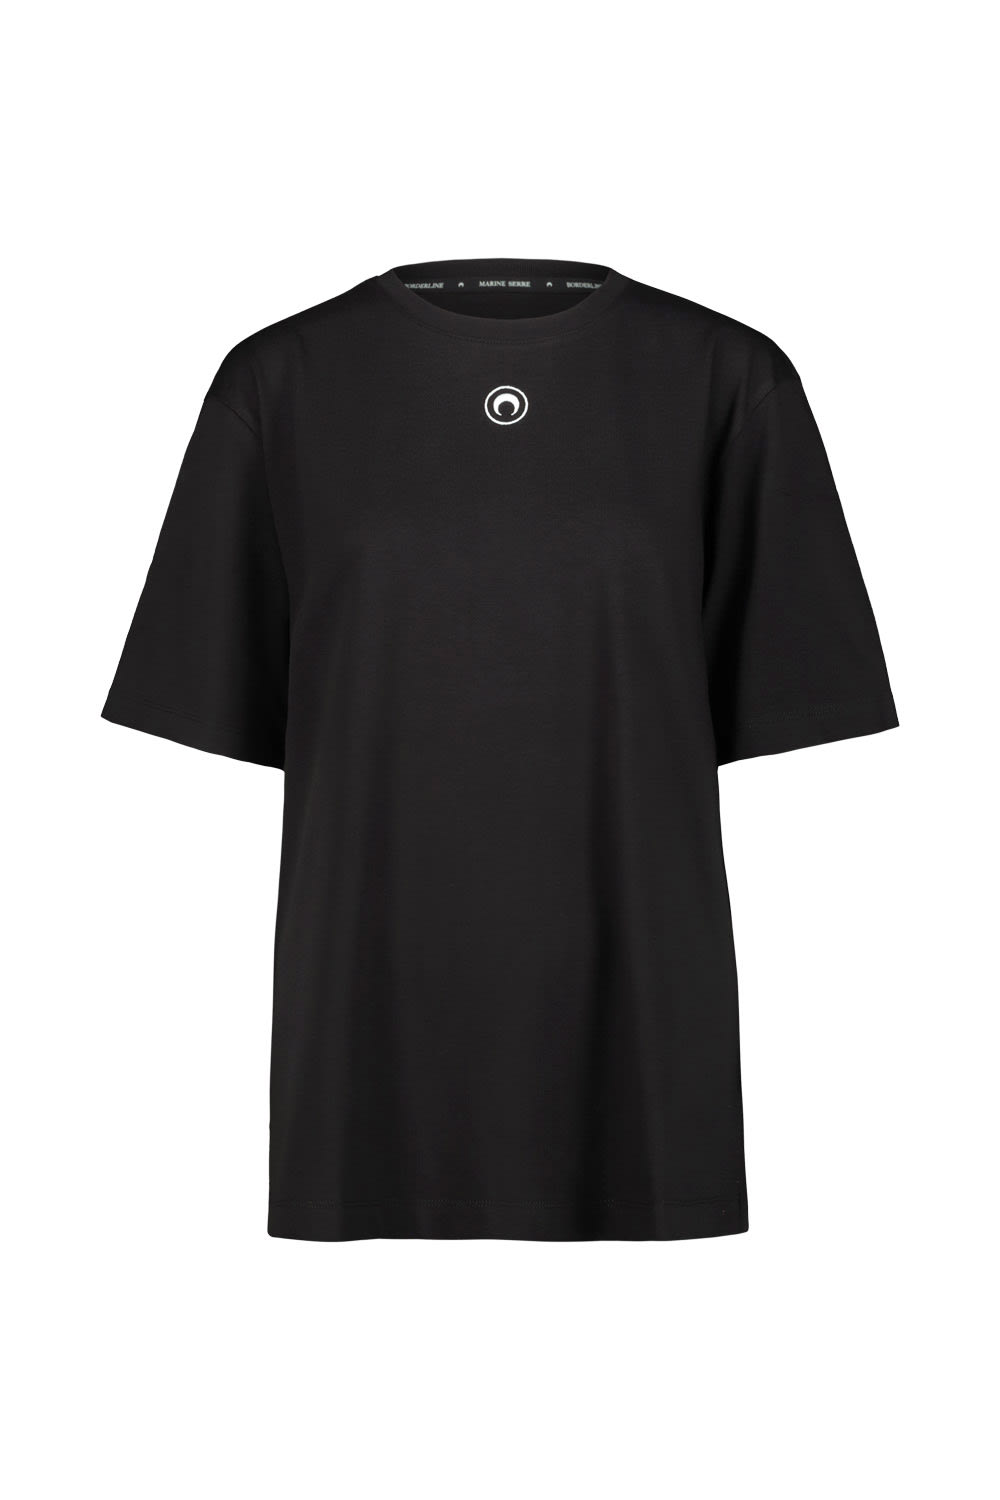 Shop Marine Serre Organic Cotton T.shirt In Black